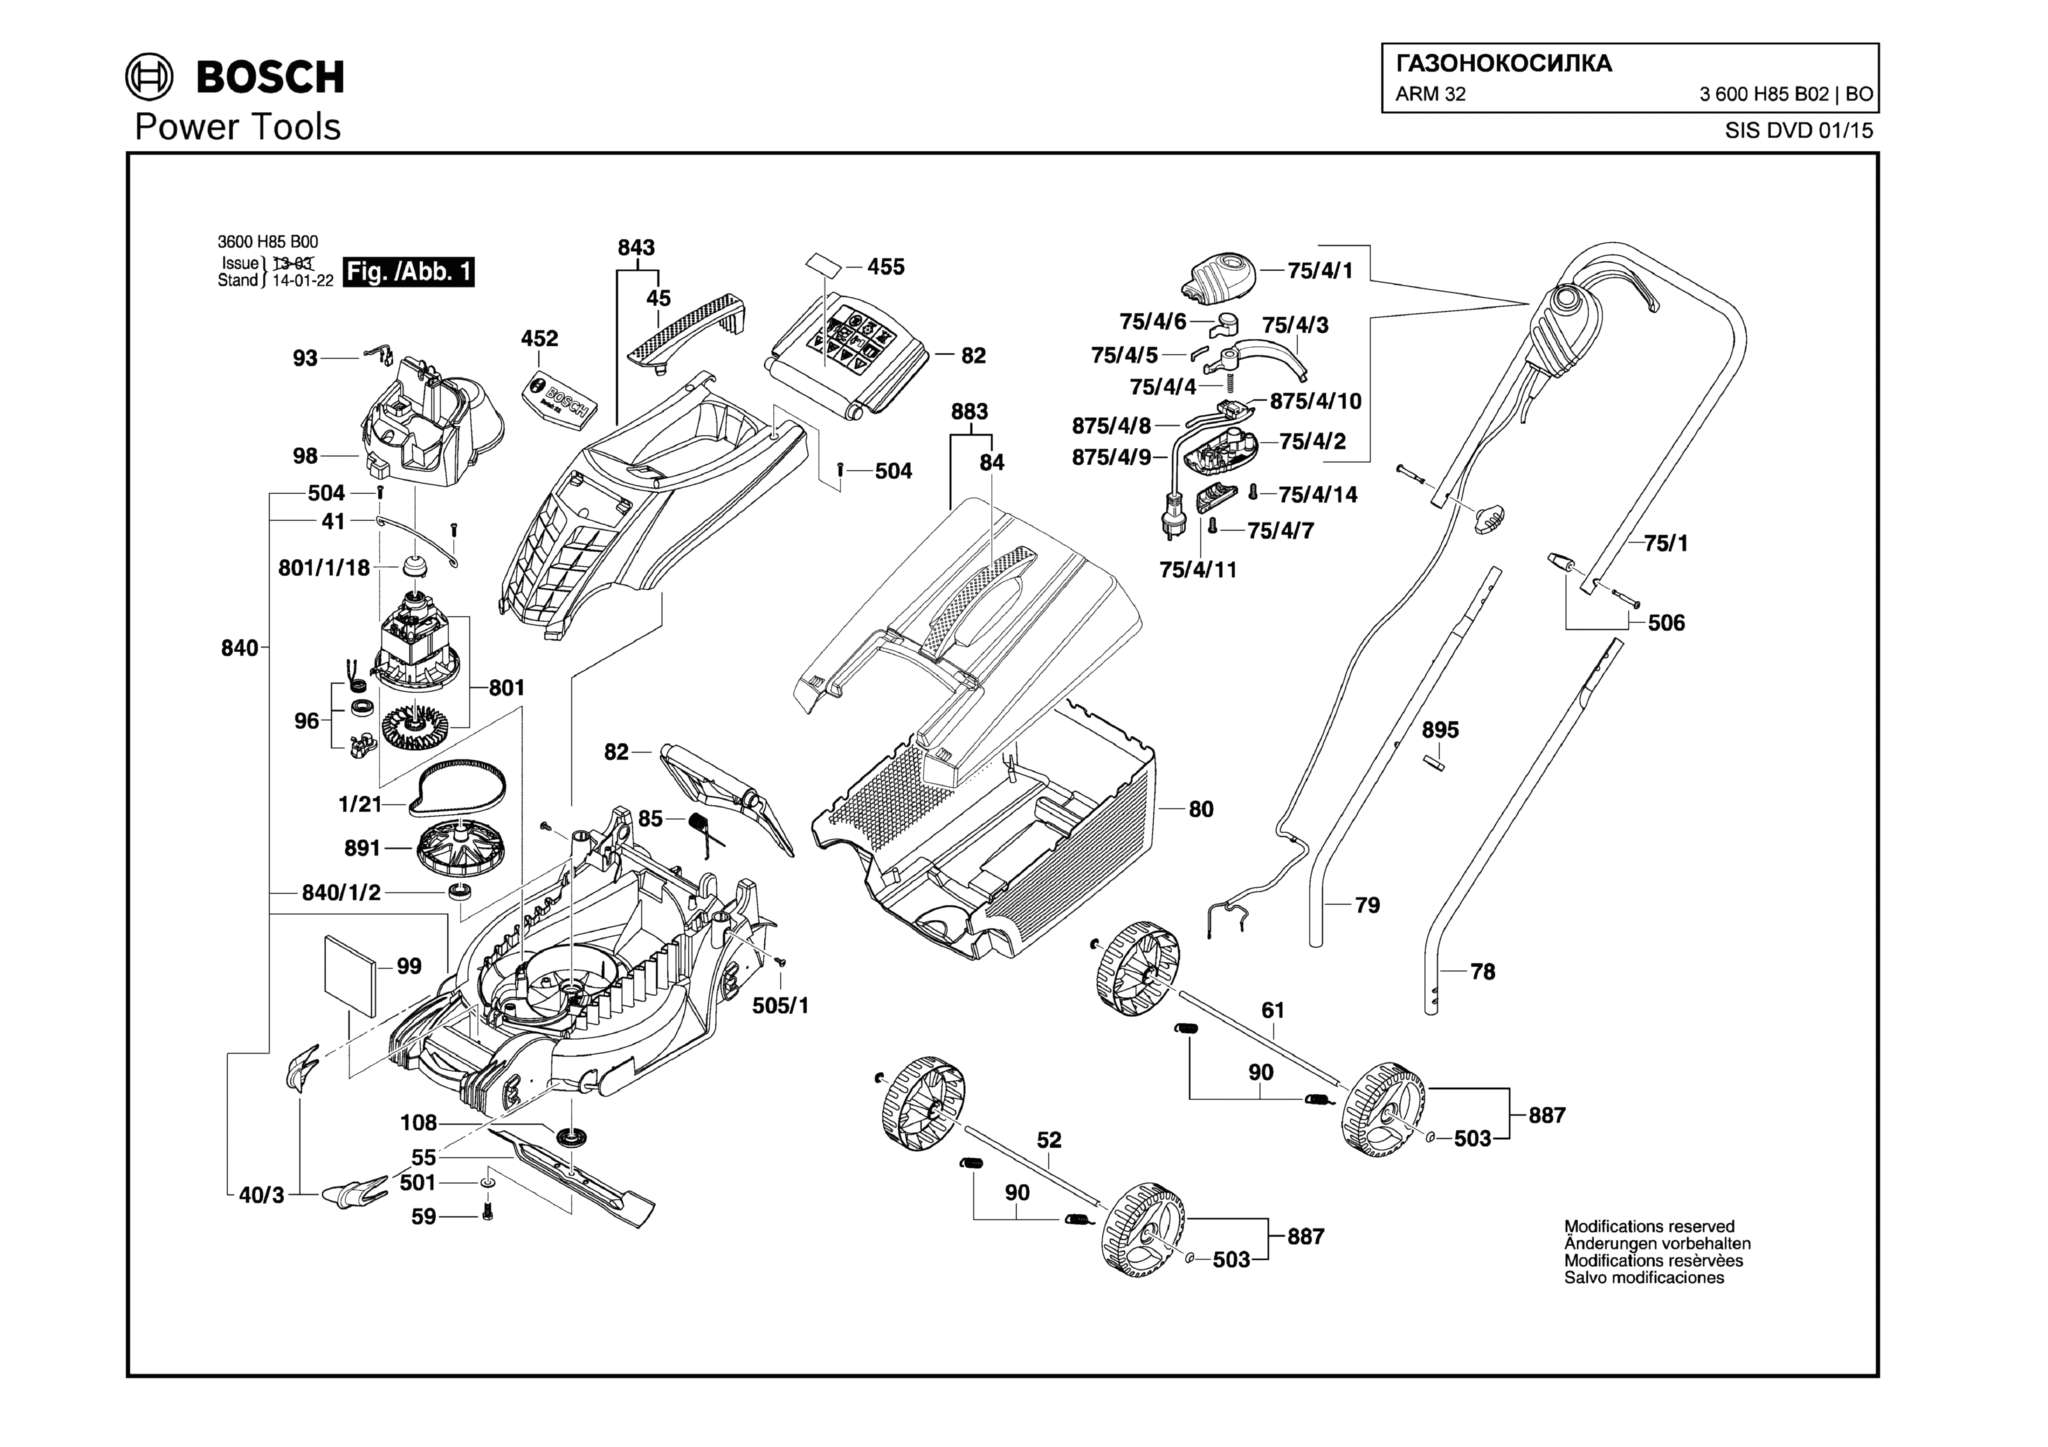 Запчасти, схема и деталировка Bosch ARM 32 (ТИП 3600H85B02)